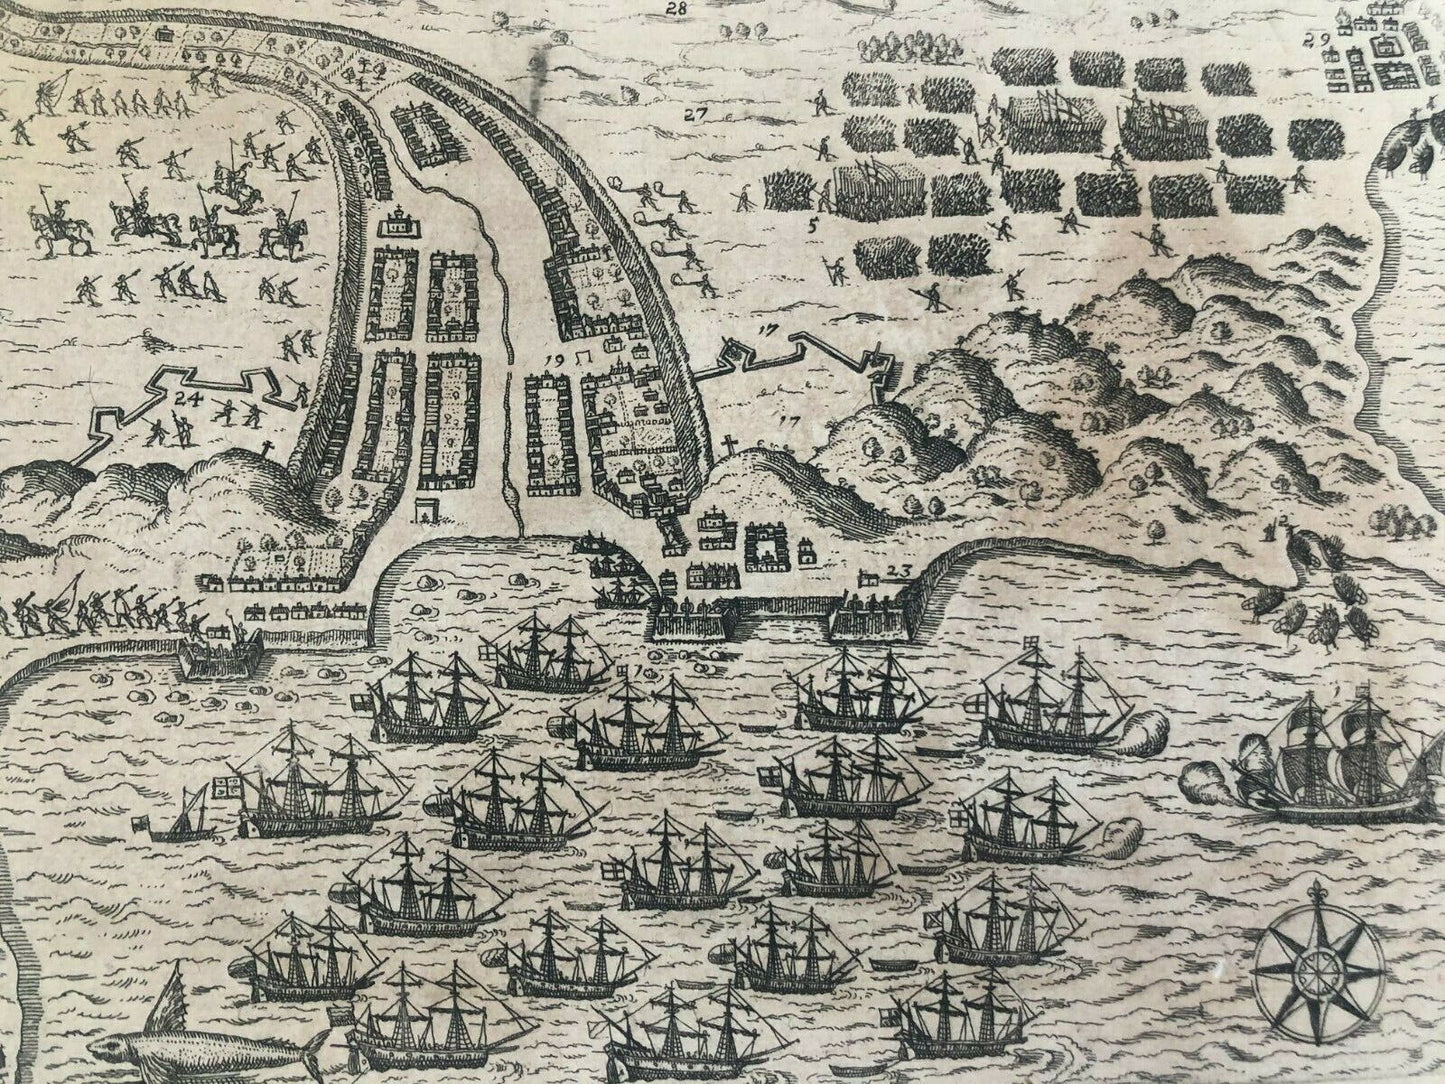 De Bry “Francis Drake attacks Praia, Santiago in the Cape Verde Islands" - 1599